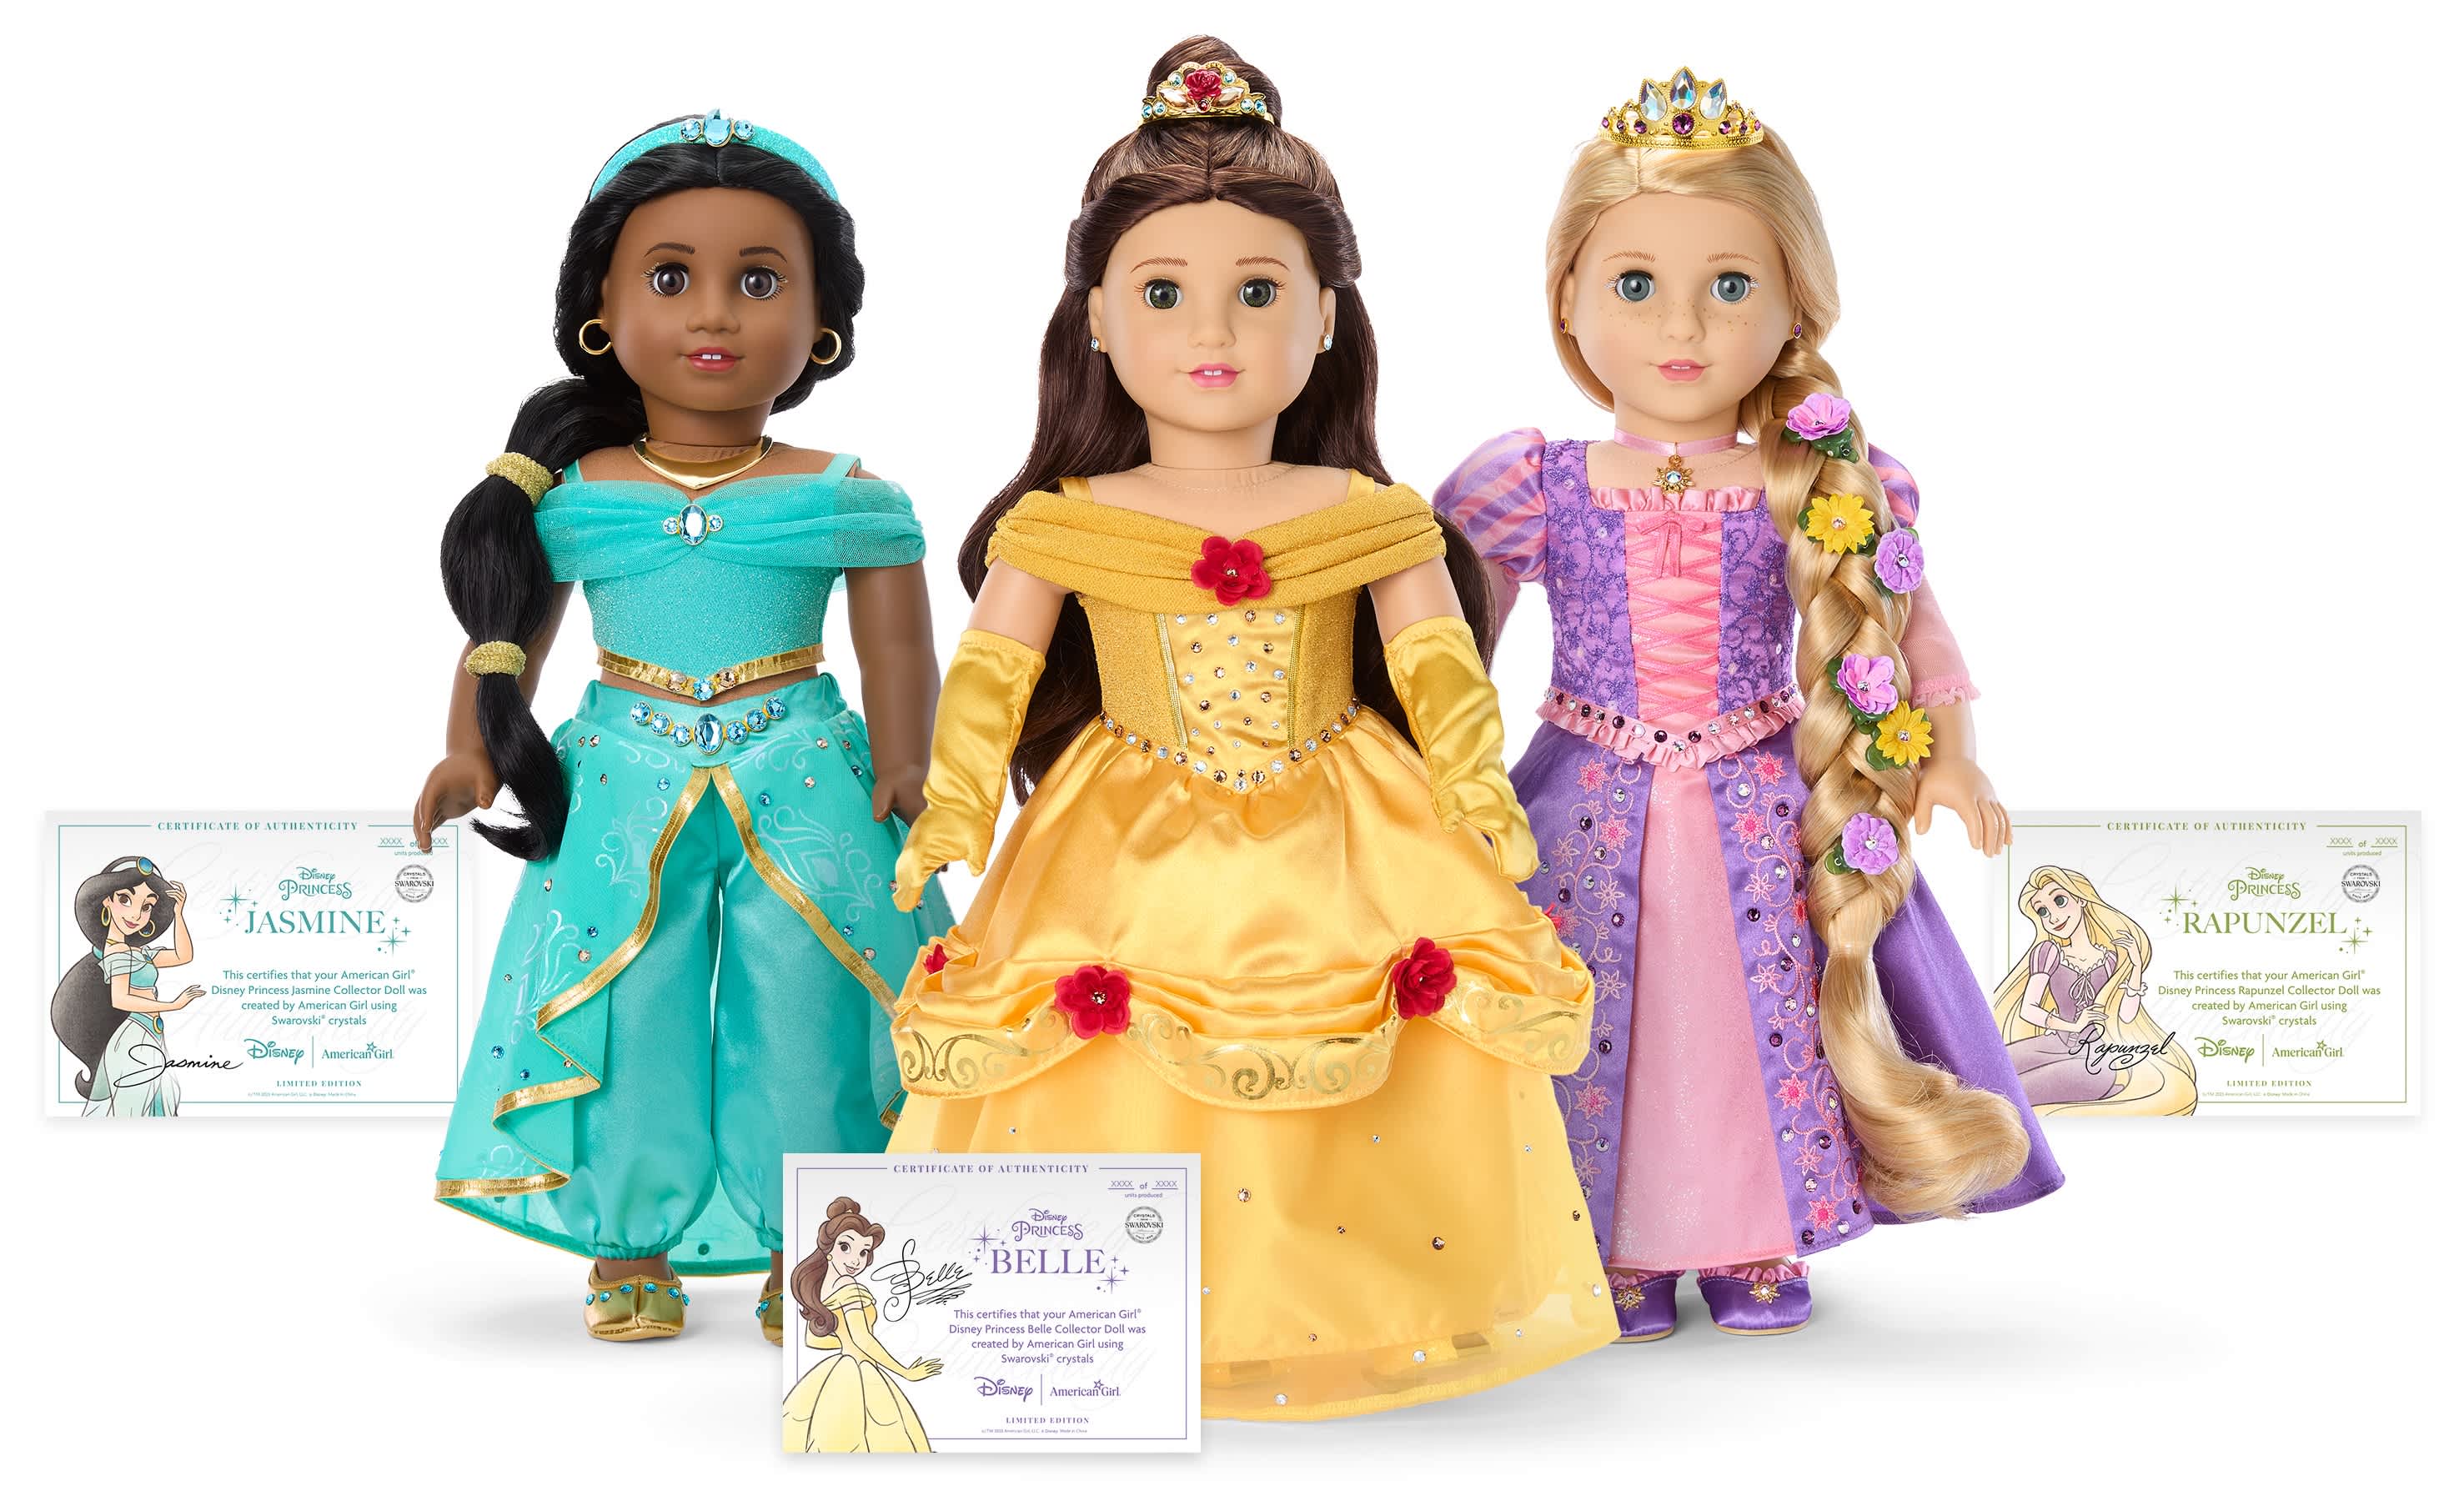 Image of Jasmine, Belle, and Rapunzel